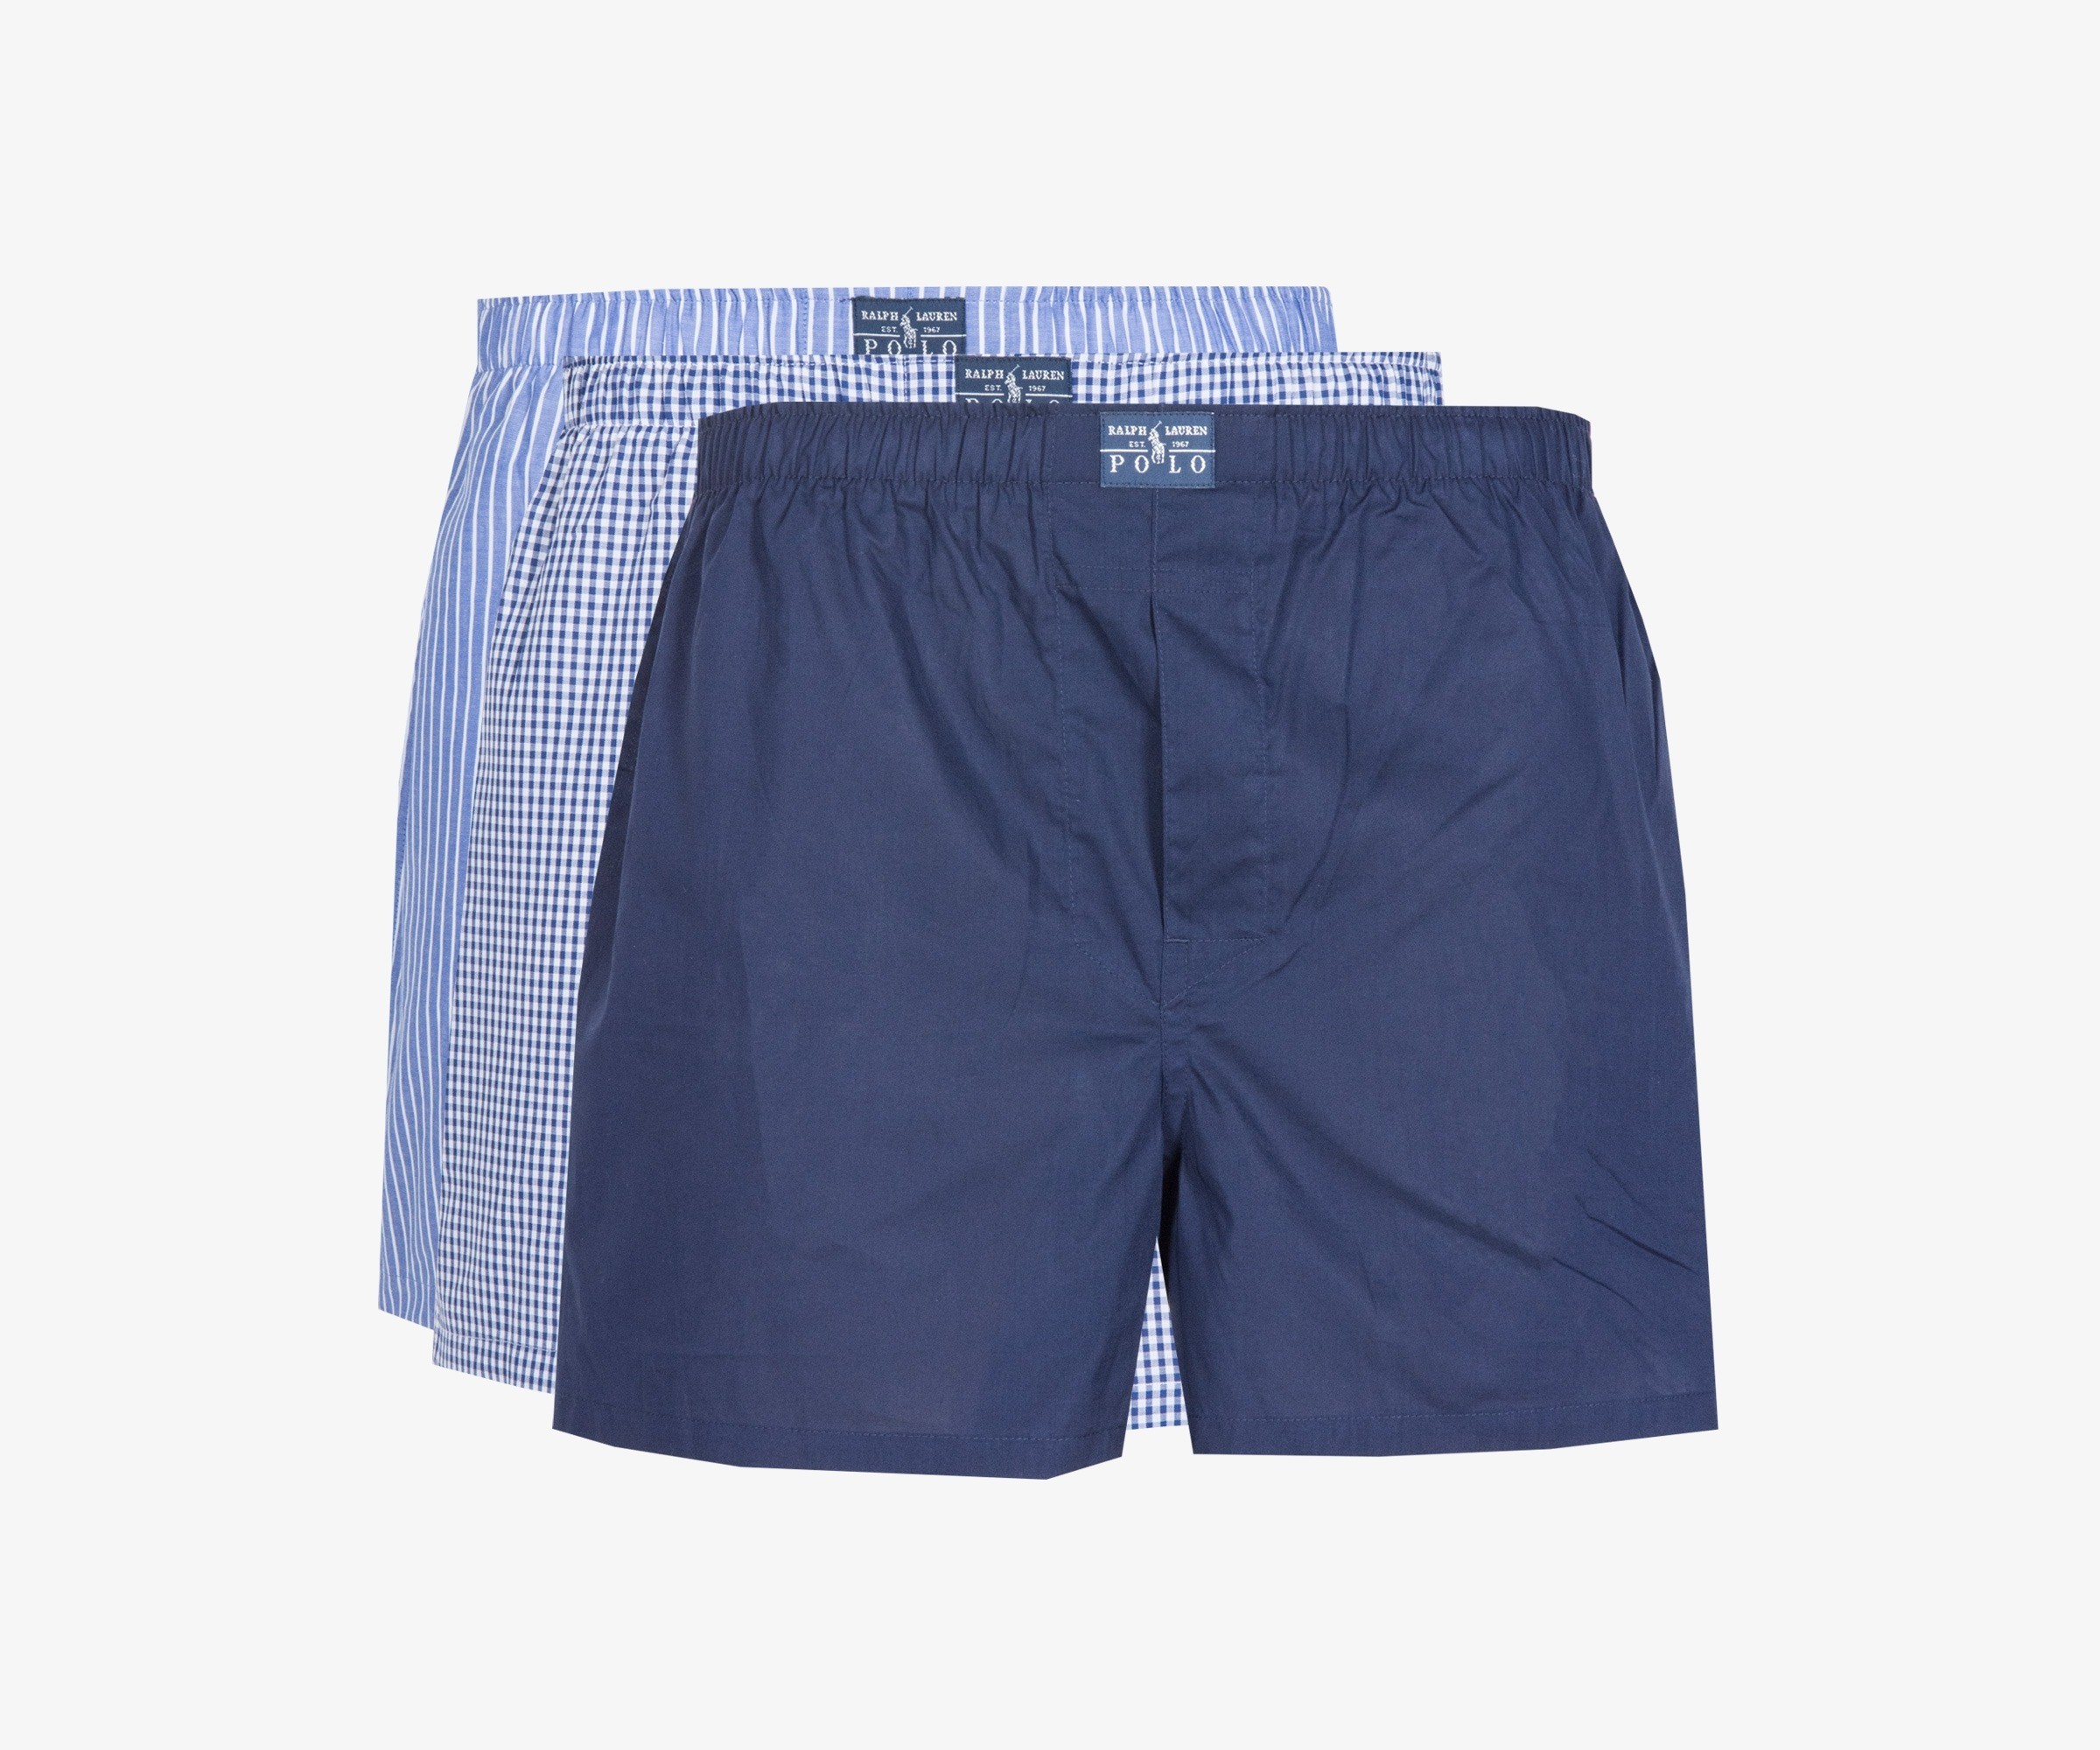 Polo Ralph Lauren 3 Pack Loose Boxer Shorts Blue/Navy/White